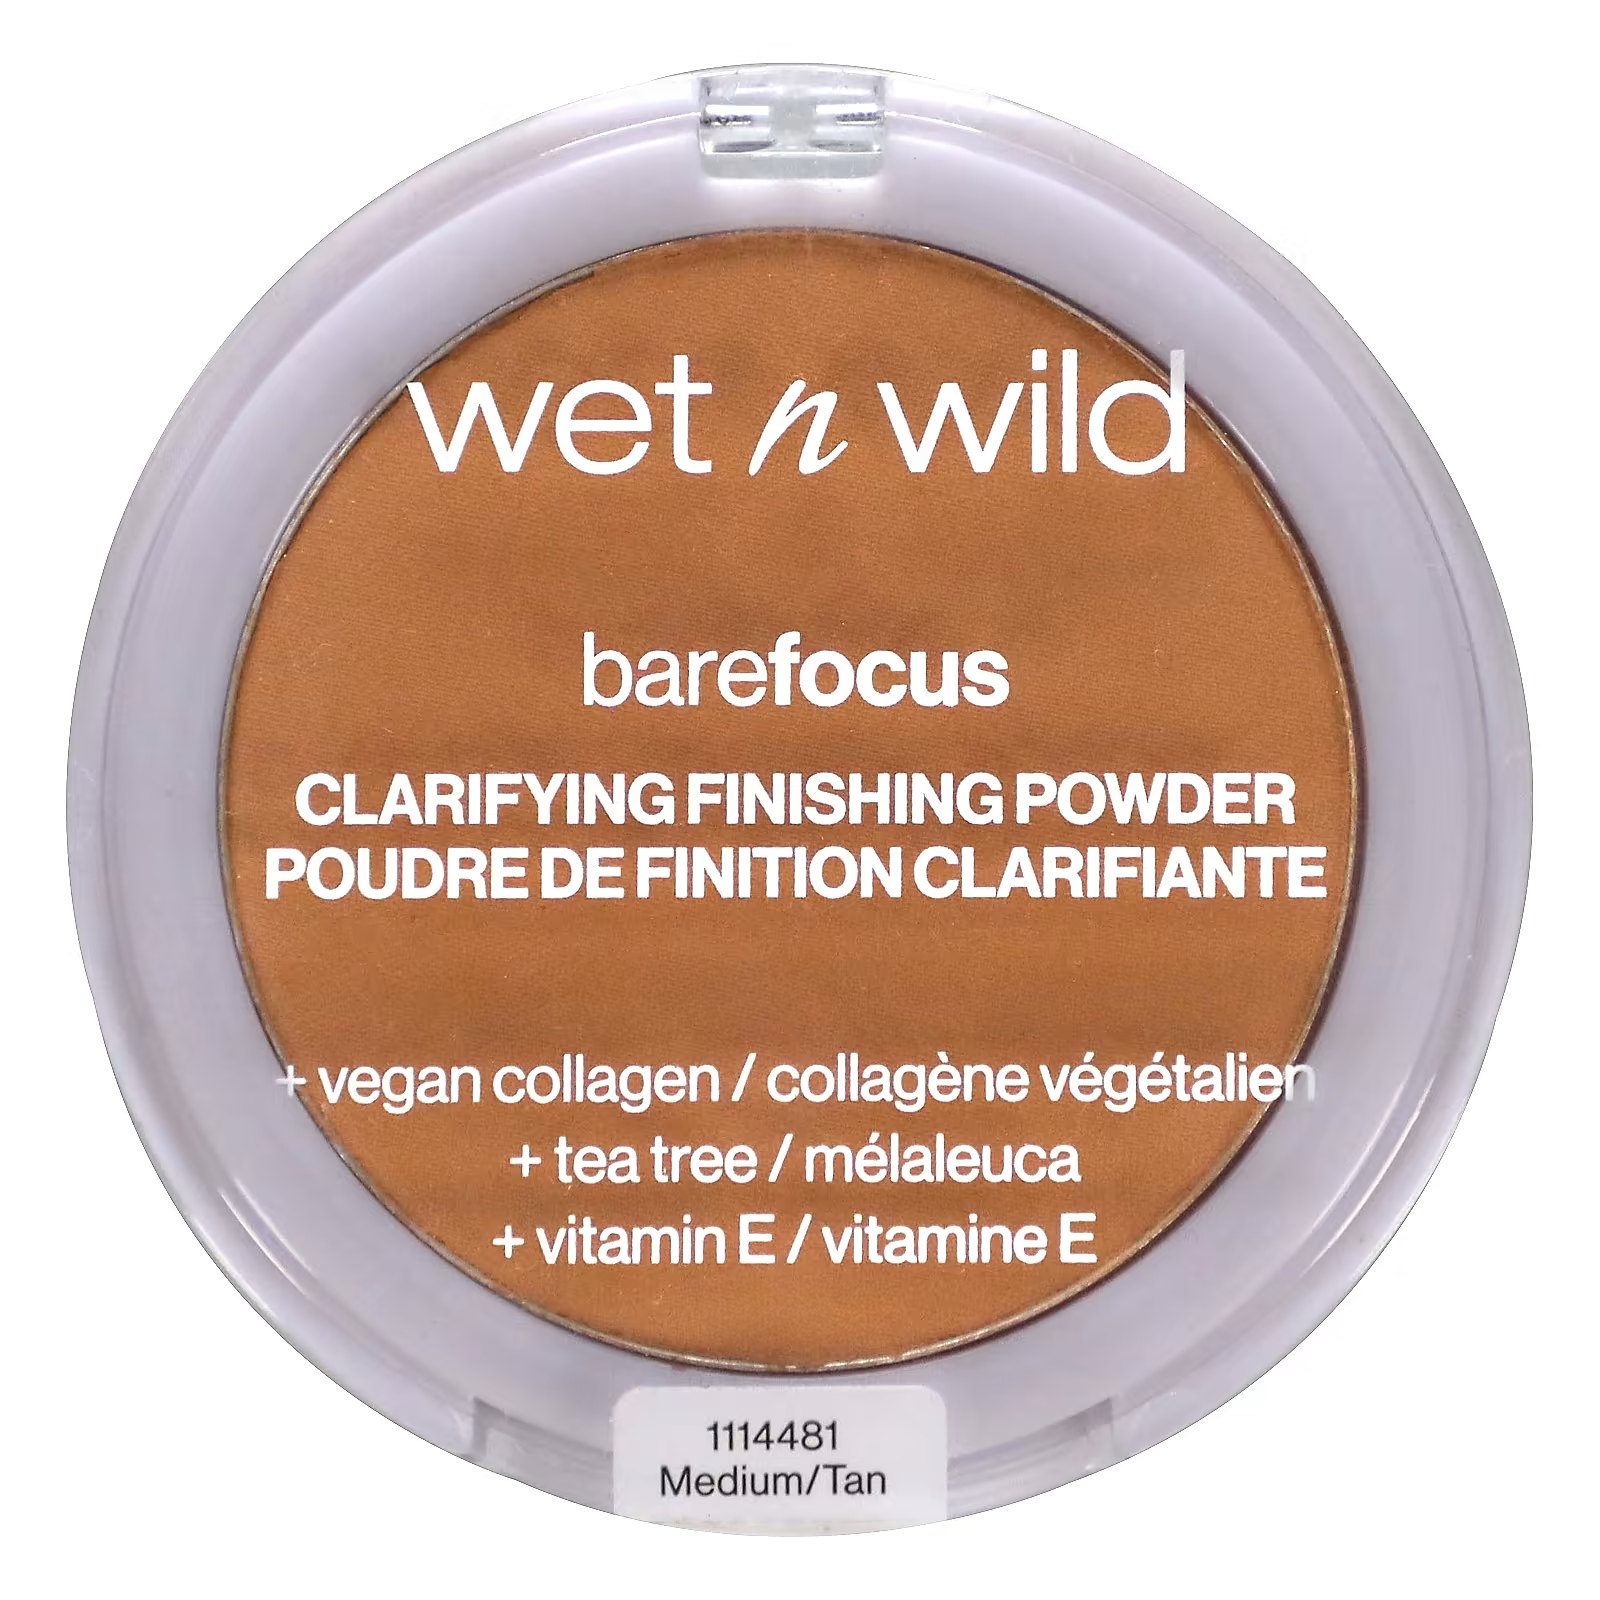 Пудра для лица Wet n Wild Barefocus Clarifying Finishing Powder Medium/Tan